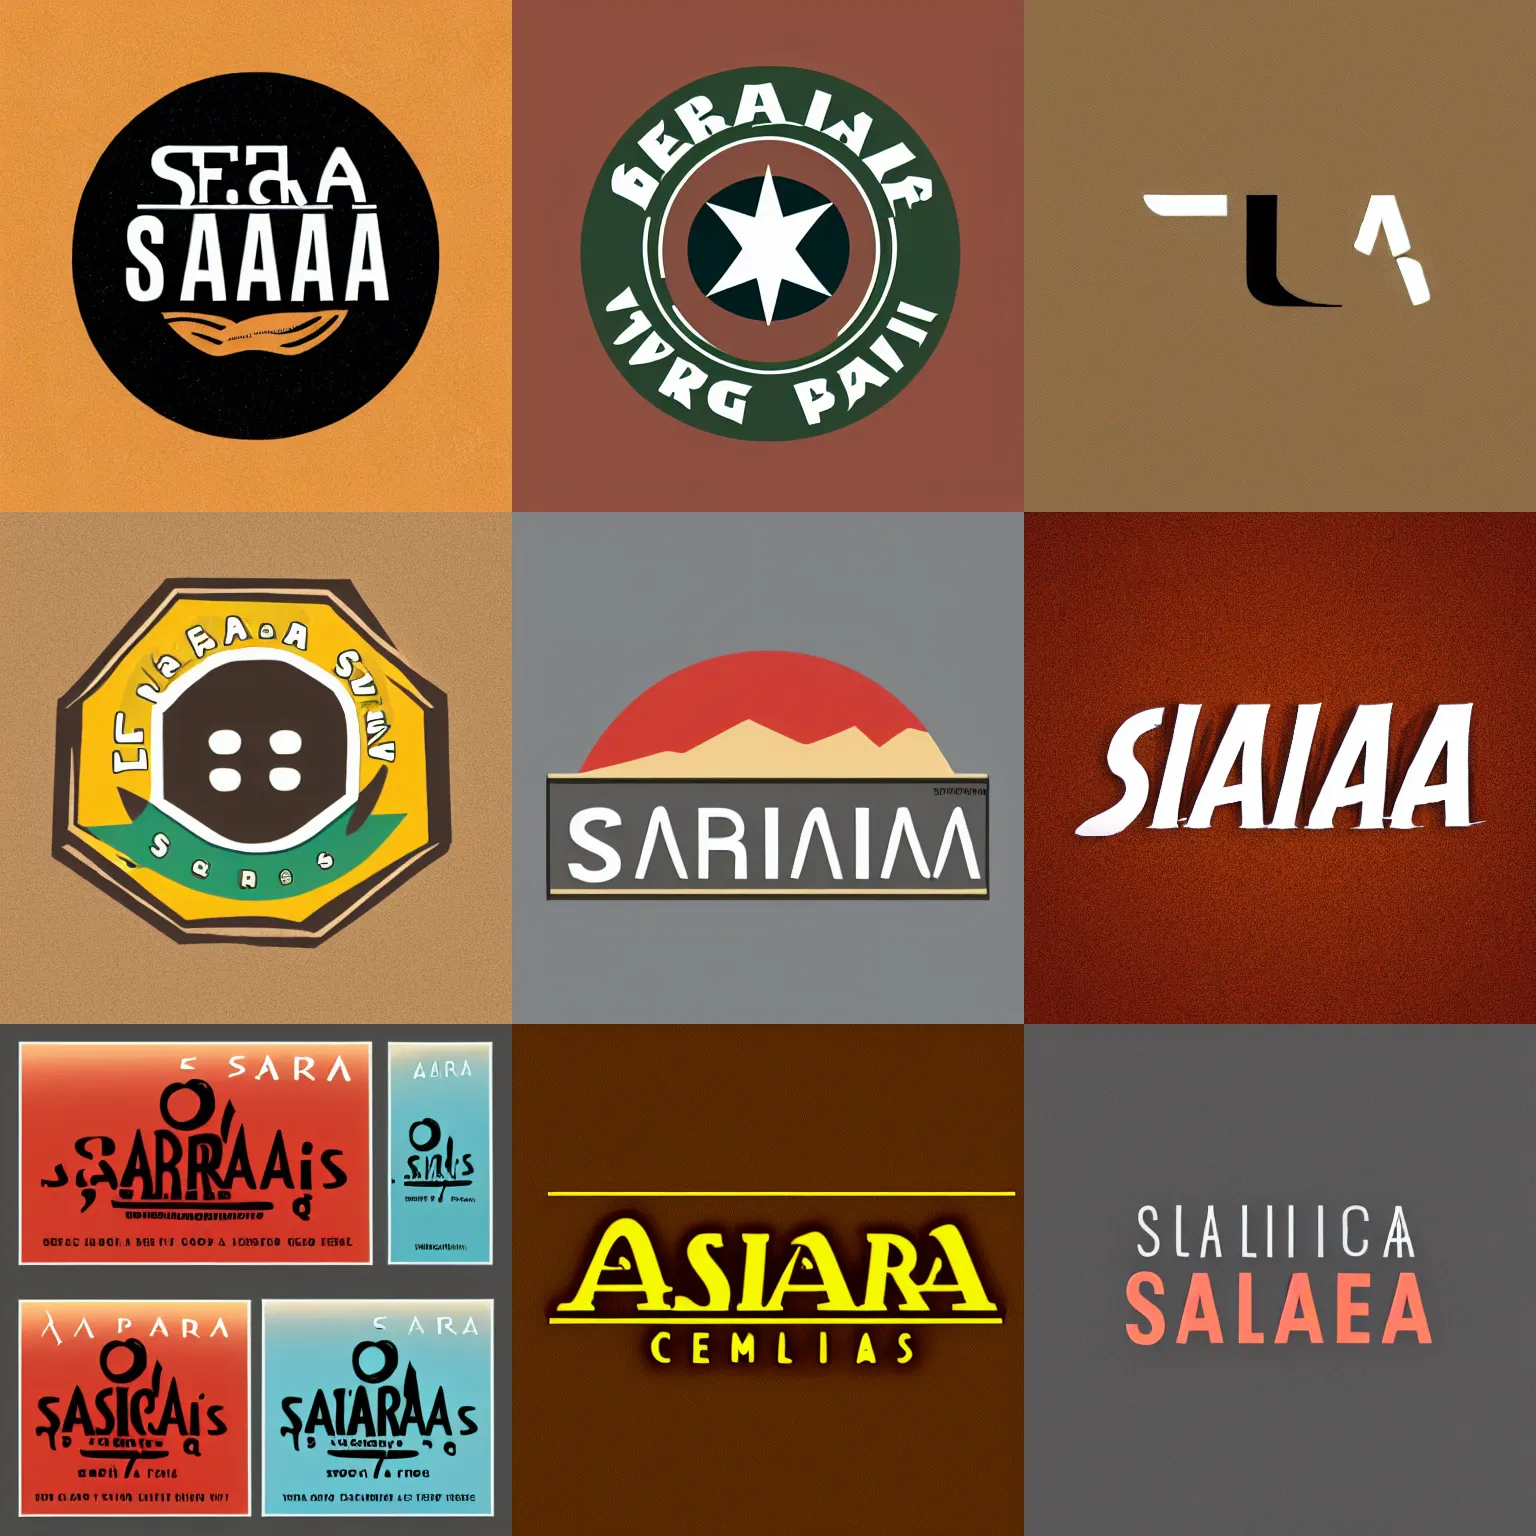 Image similar to Sahara comics logo for a publishing Company, minimalist, desert color scheme